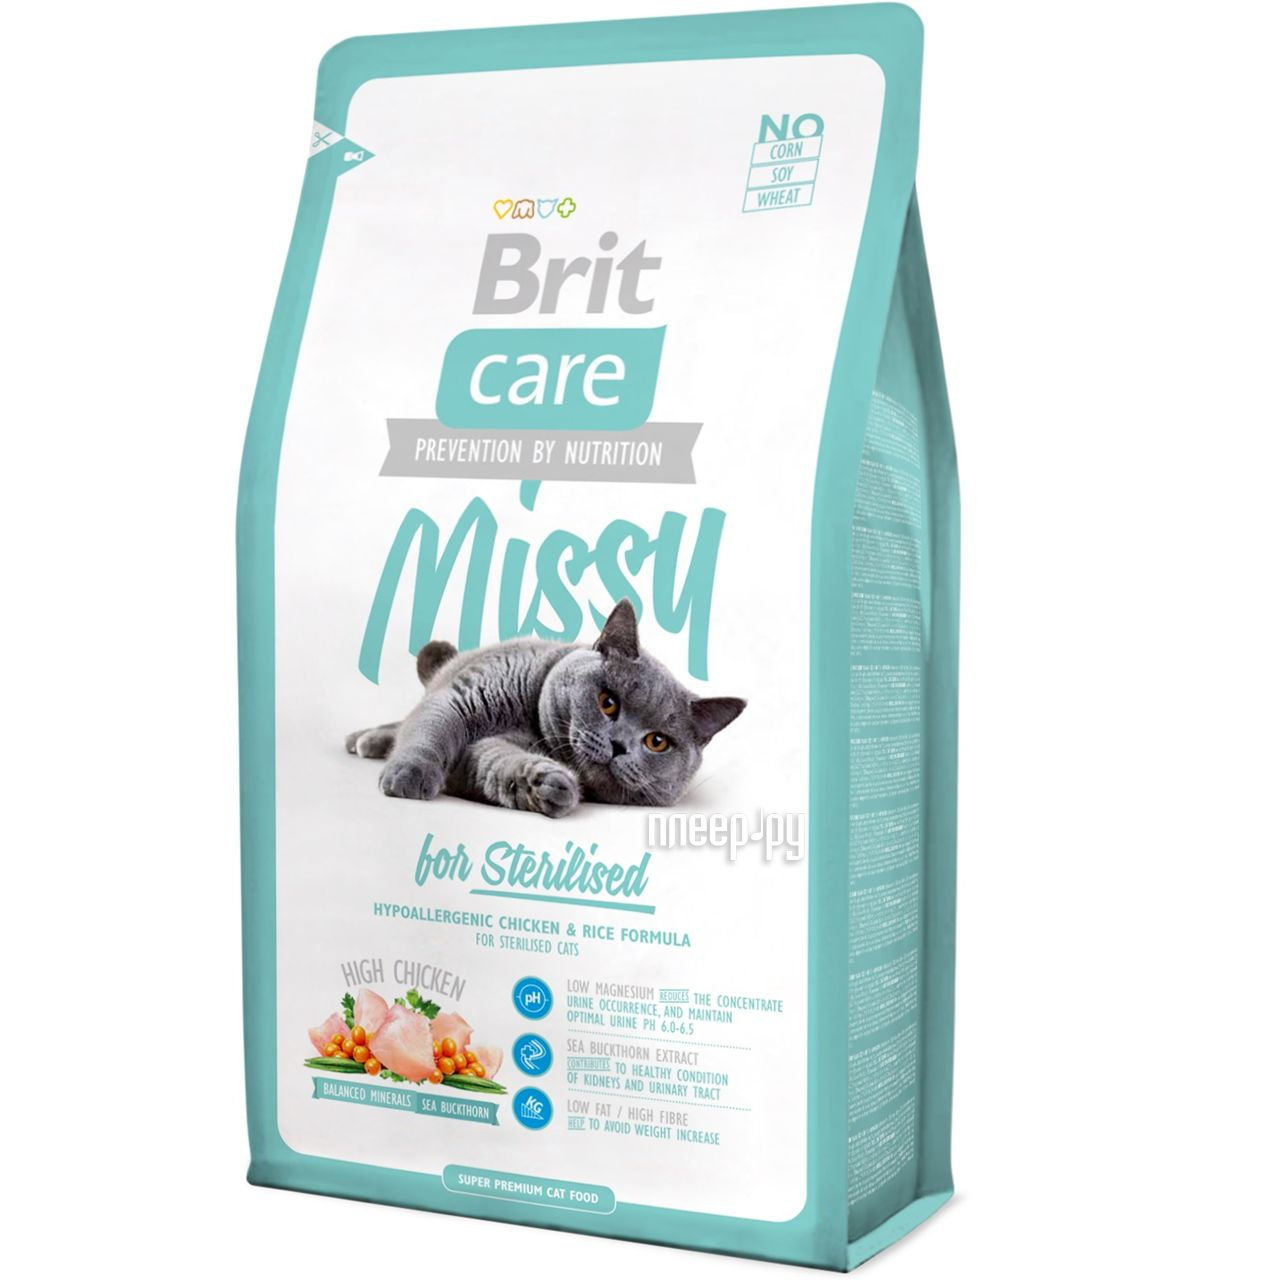  Brit Care Cat Missy for Sterilised 2kg   132625 / 103301 / 05739  756 